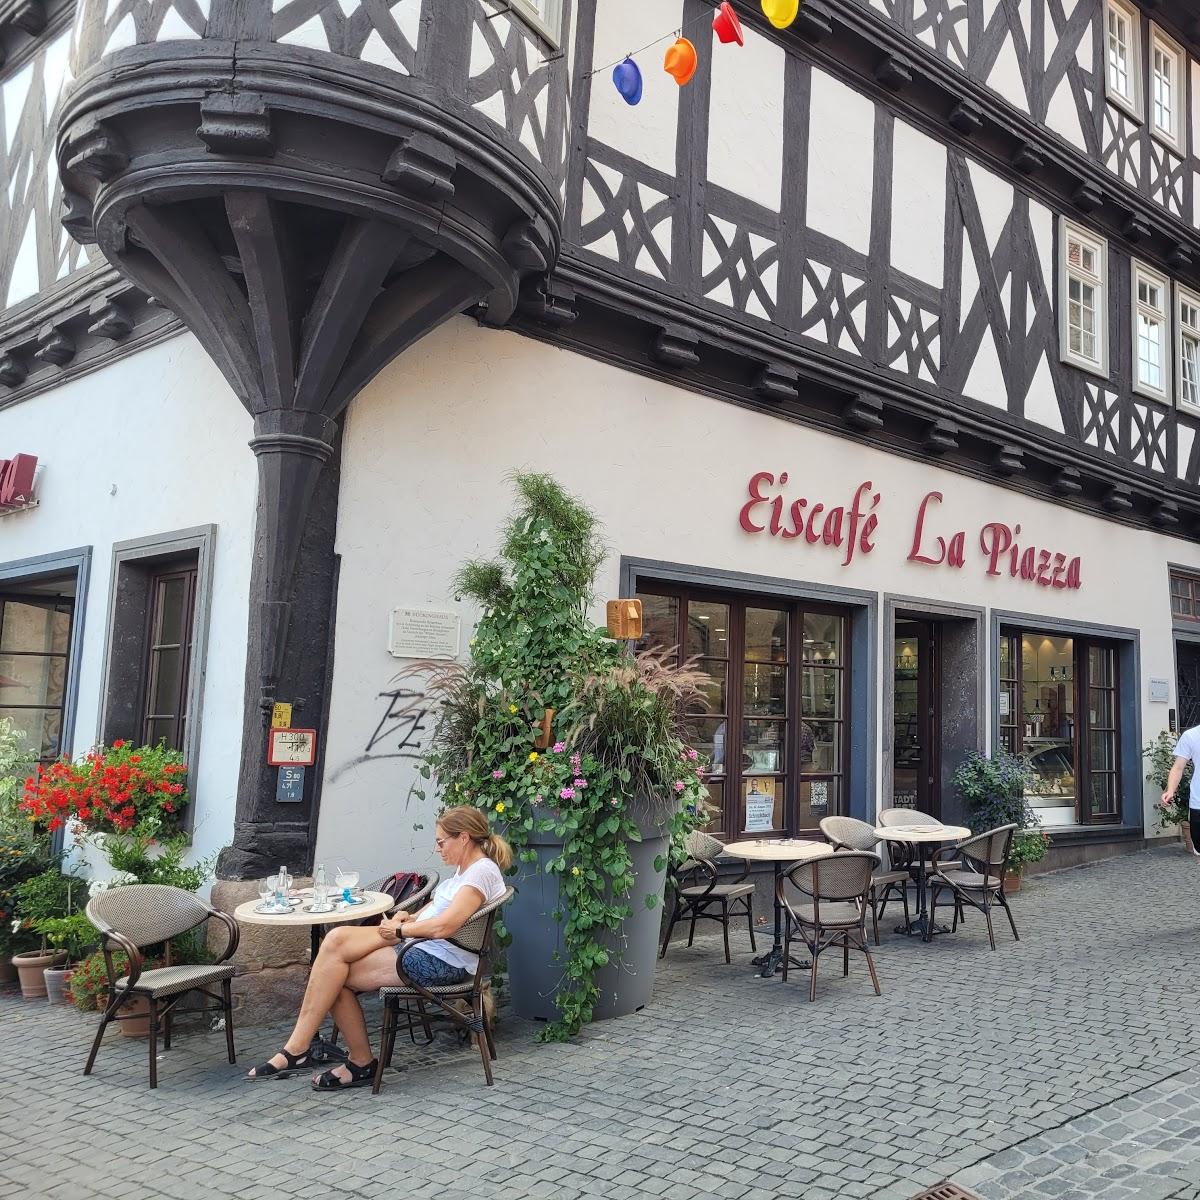 Restaurant "Eiscafé La Piazza" in Alsfeld